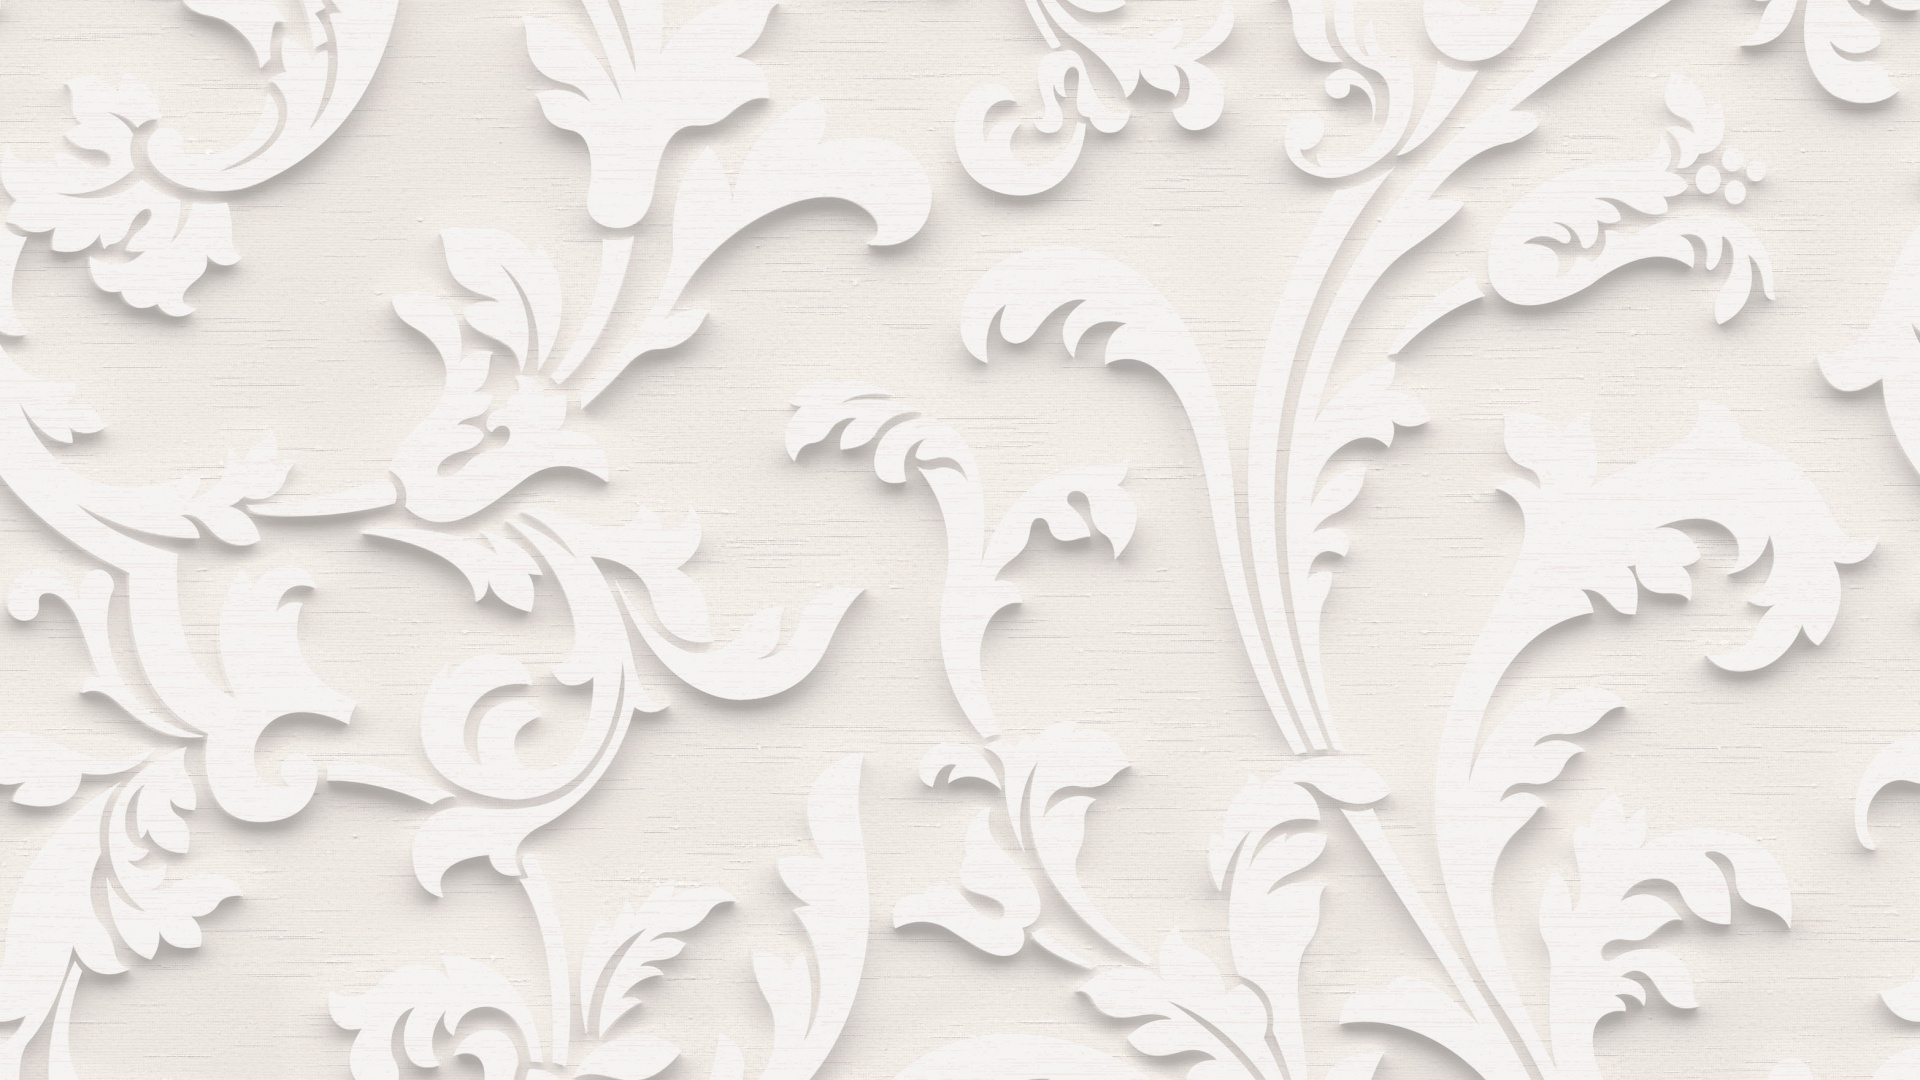 Textil Floral Blanco y Gris. Wallpaper in 1920x1080 Resolution